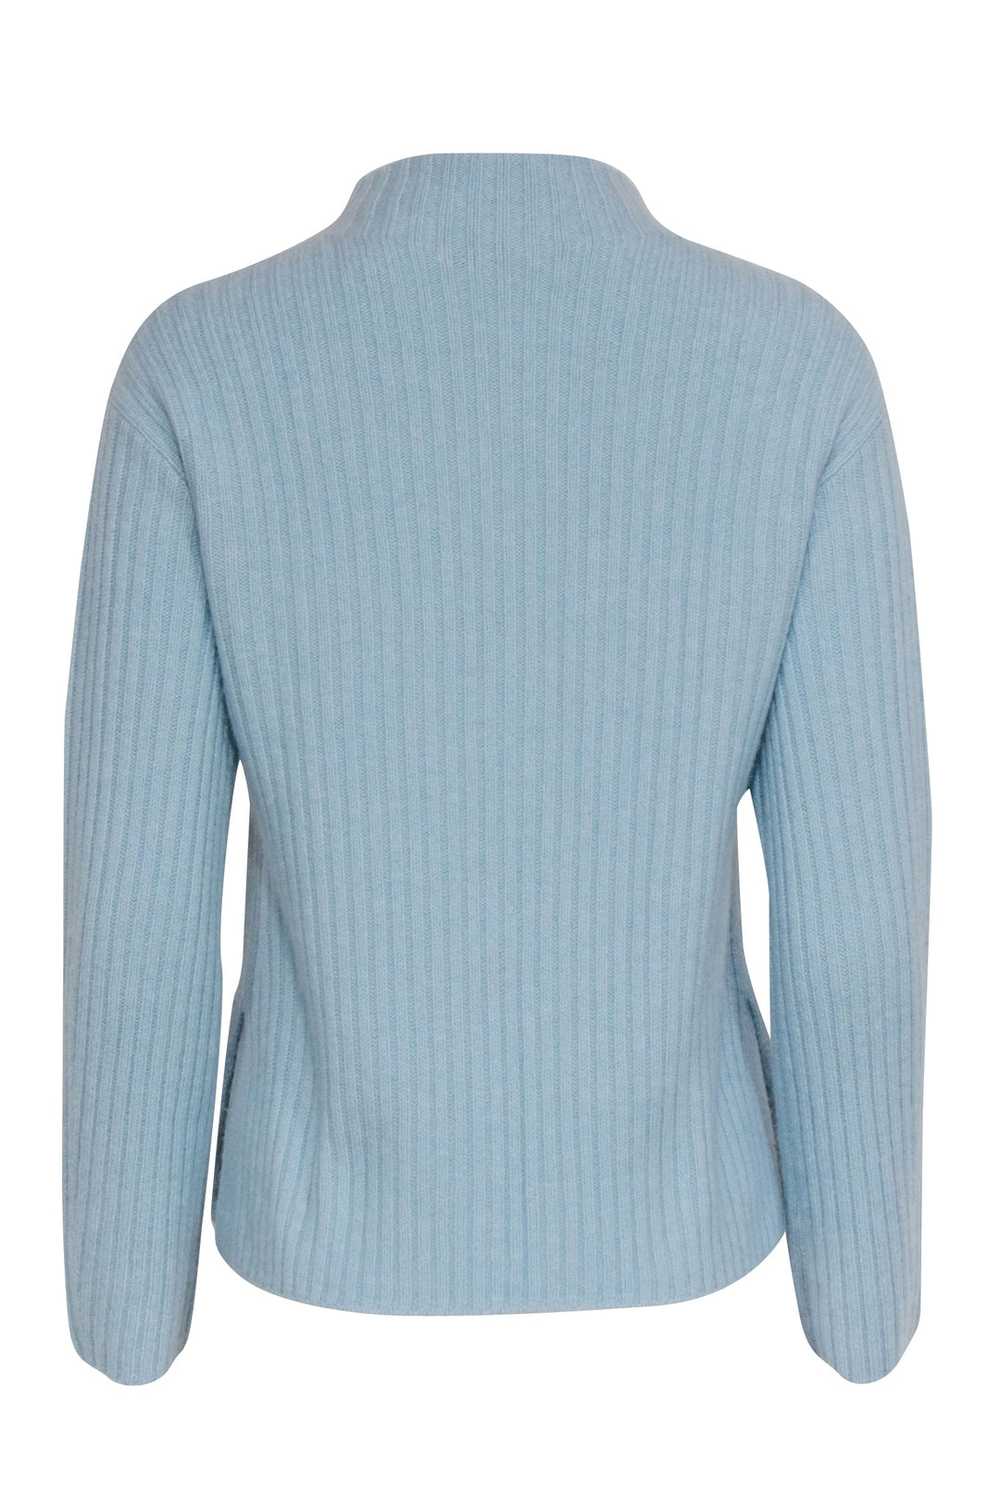 Vince - Pastel Blue Ribbed Mock Neck Sweater Sz S - image 3